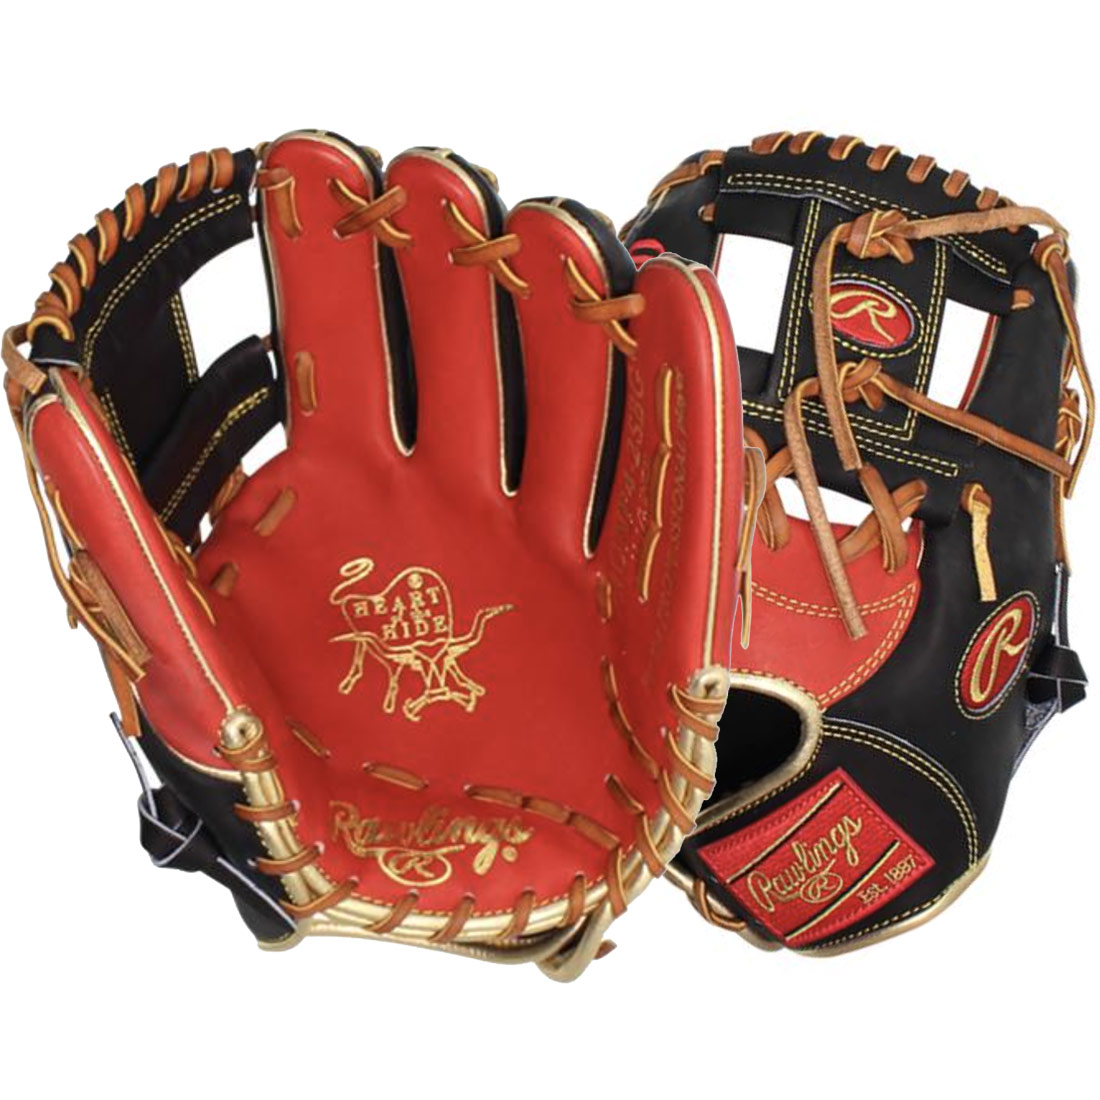 Rawlings Heart of the Hide Baseball Glove 11.5\" PRONP4-2SBG